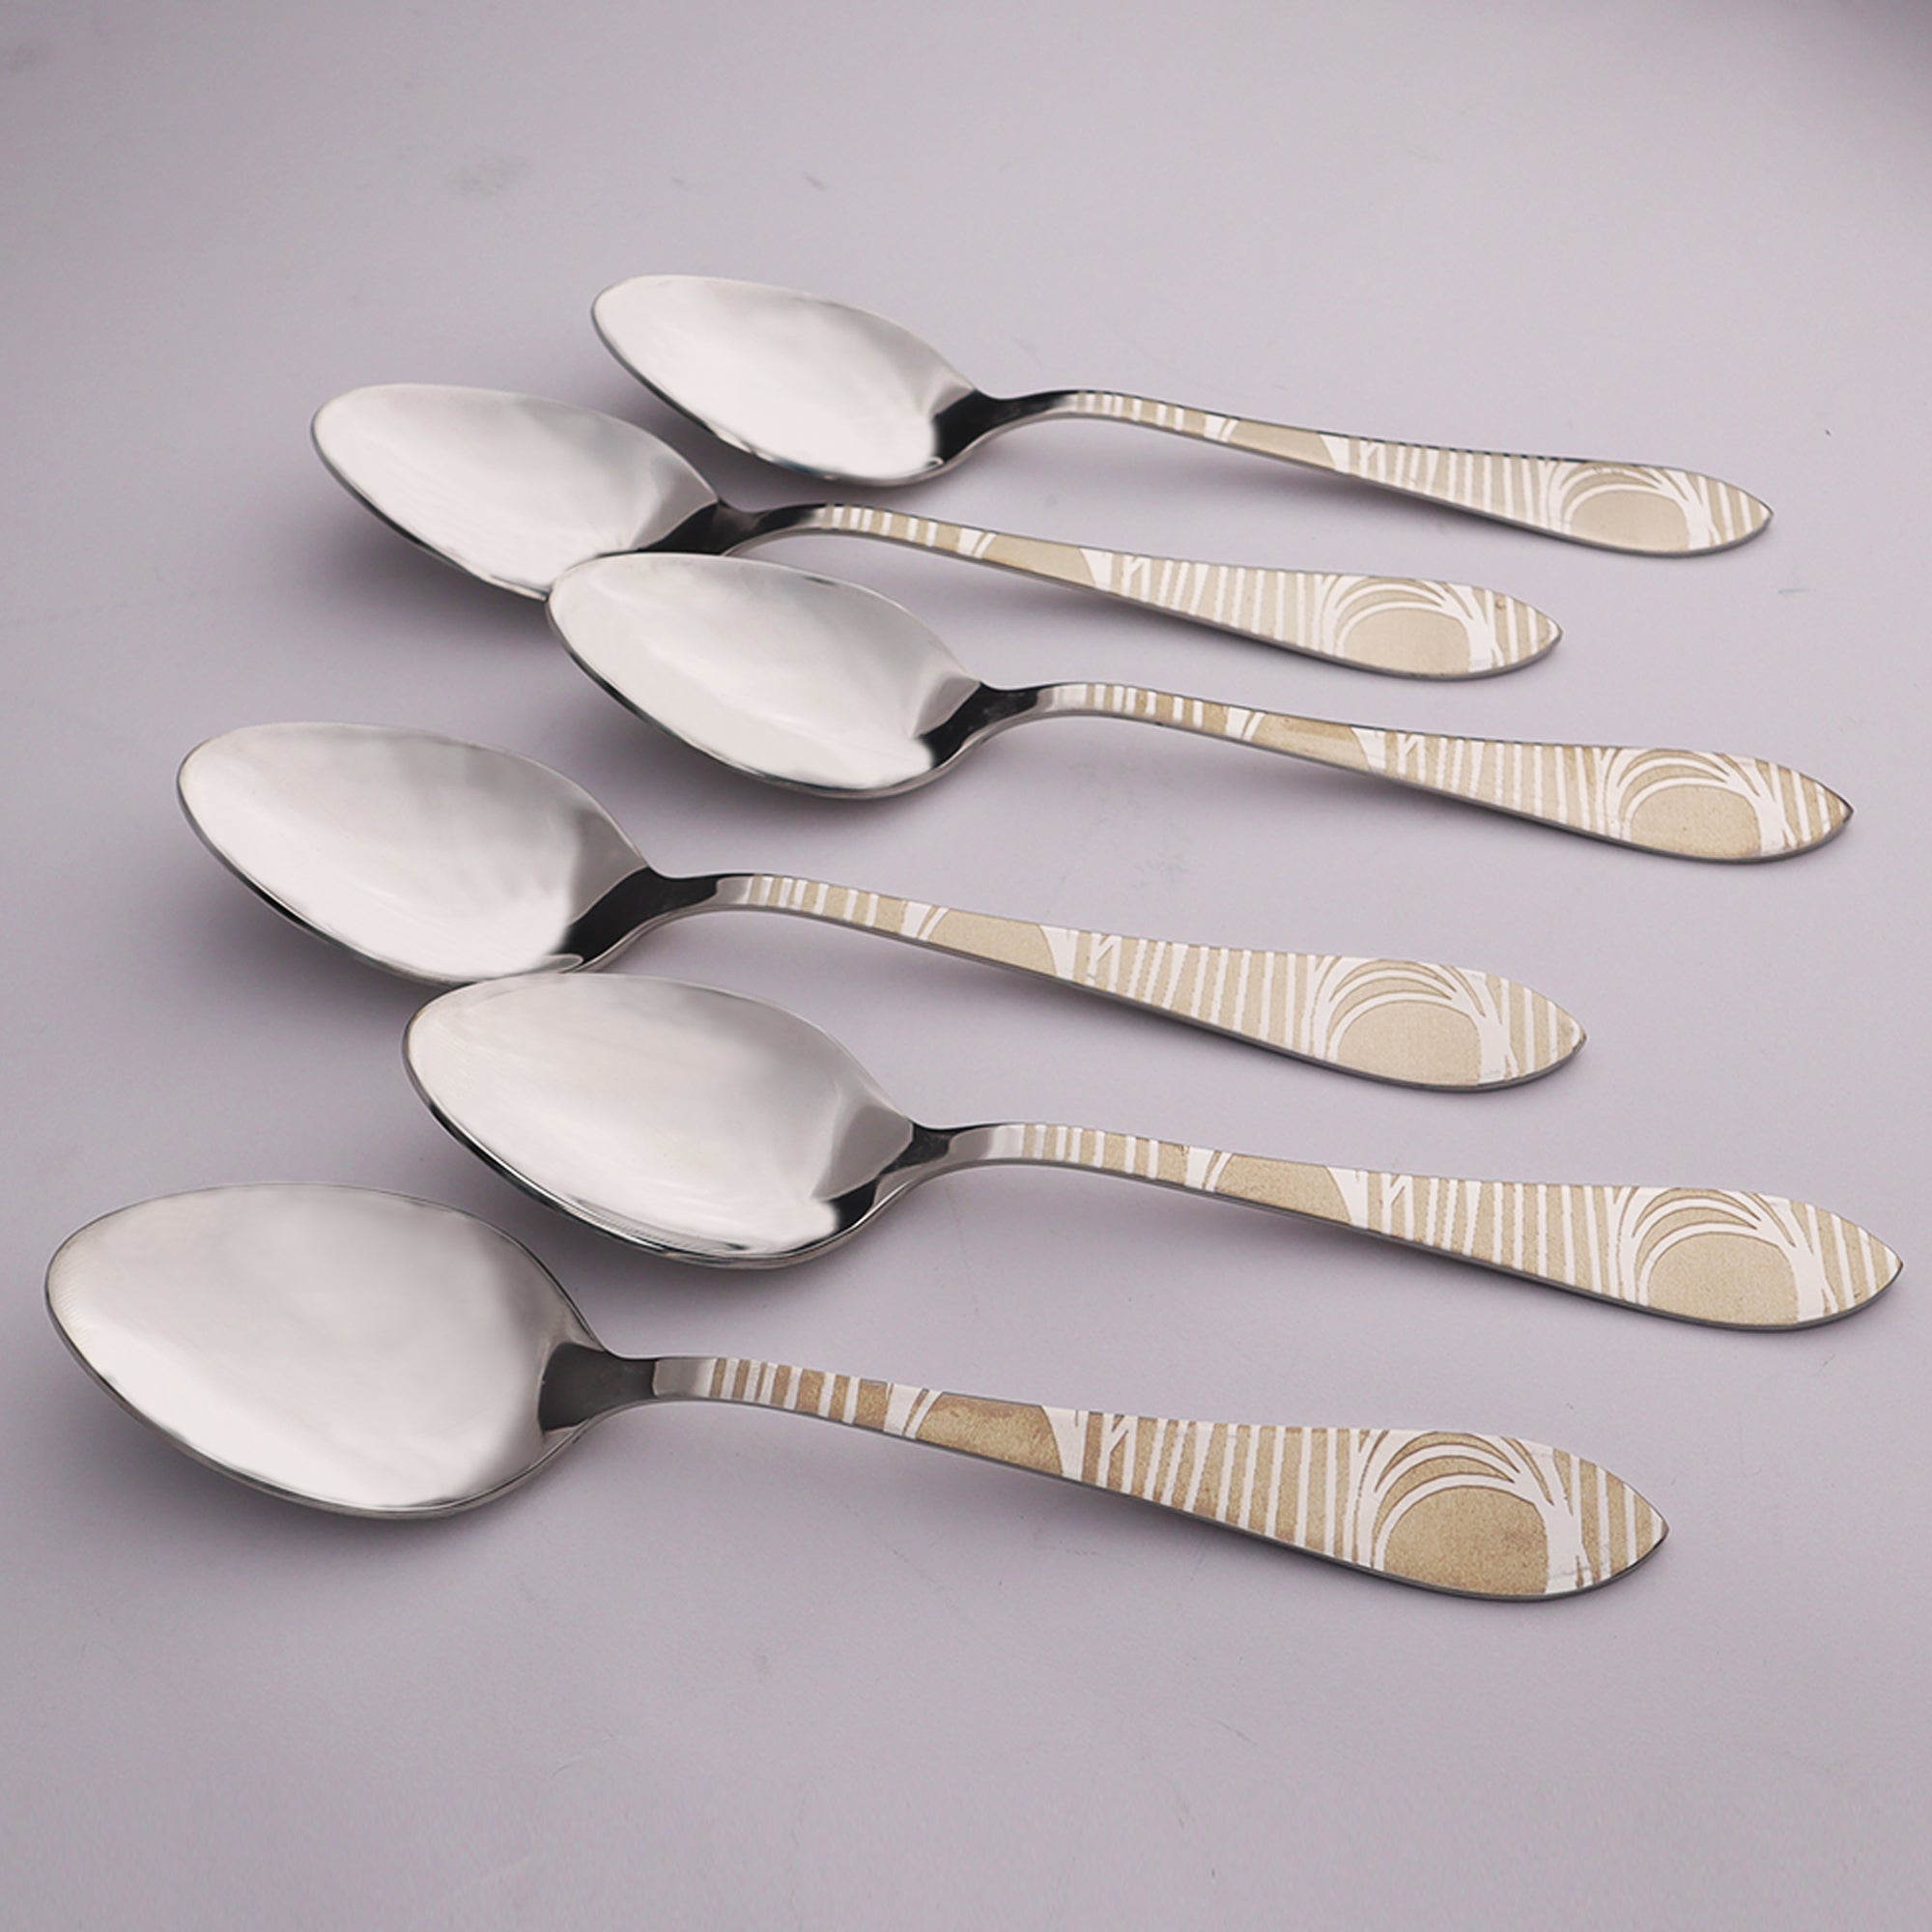 6 Pcs CHEF Nice Stainless Steel Tea Spoon Set 02- Kitchen Cutlery